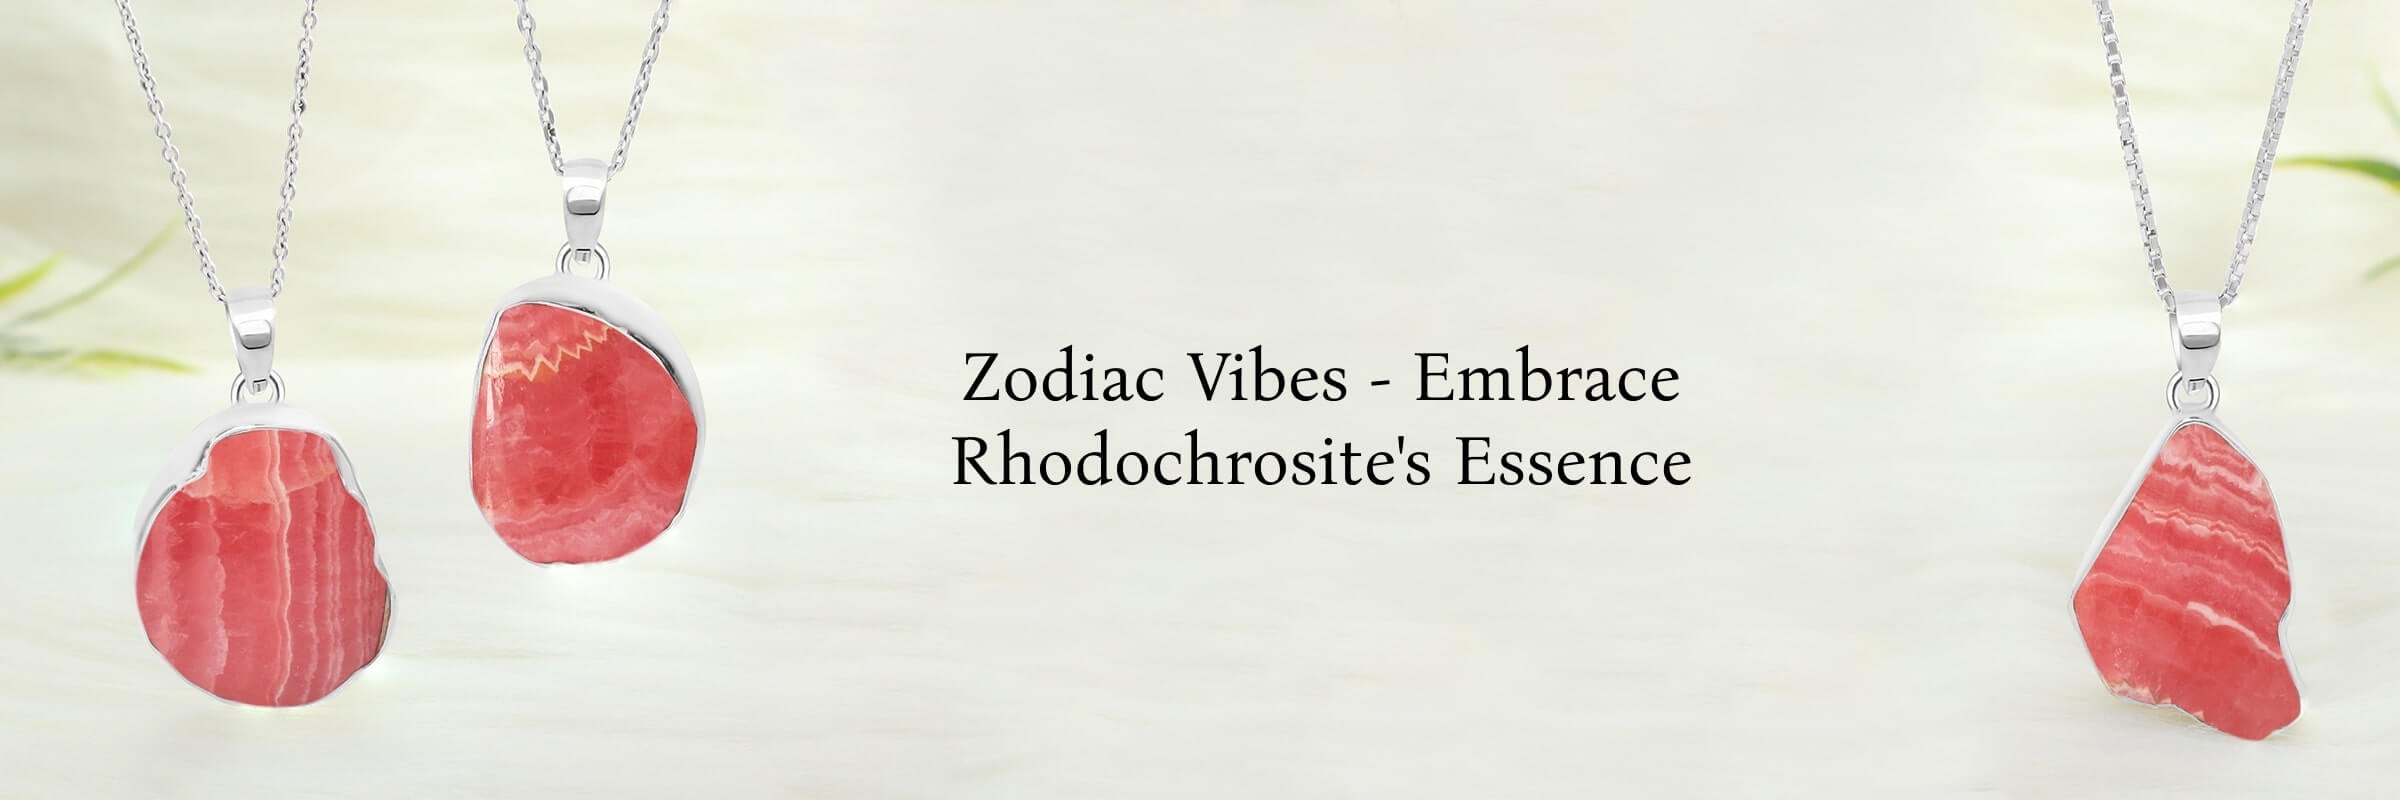 Rhodochrosite Zodiac sign